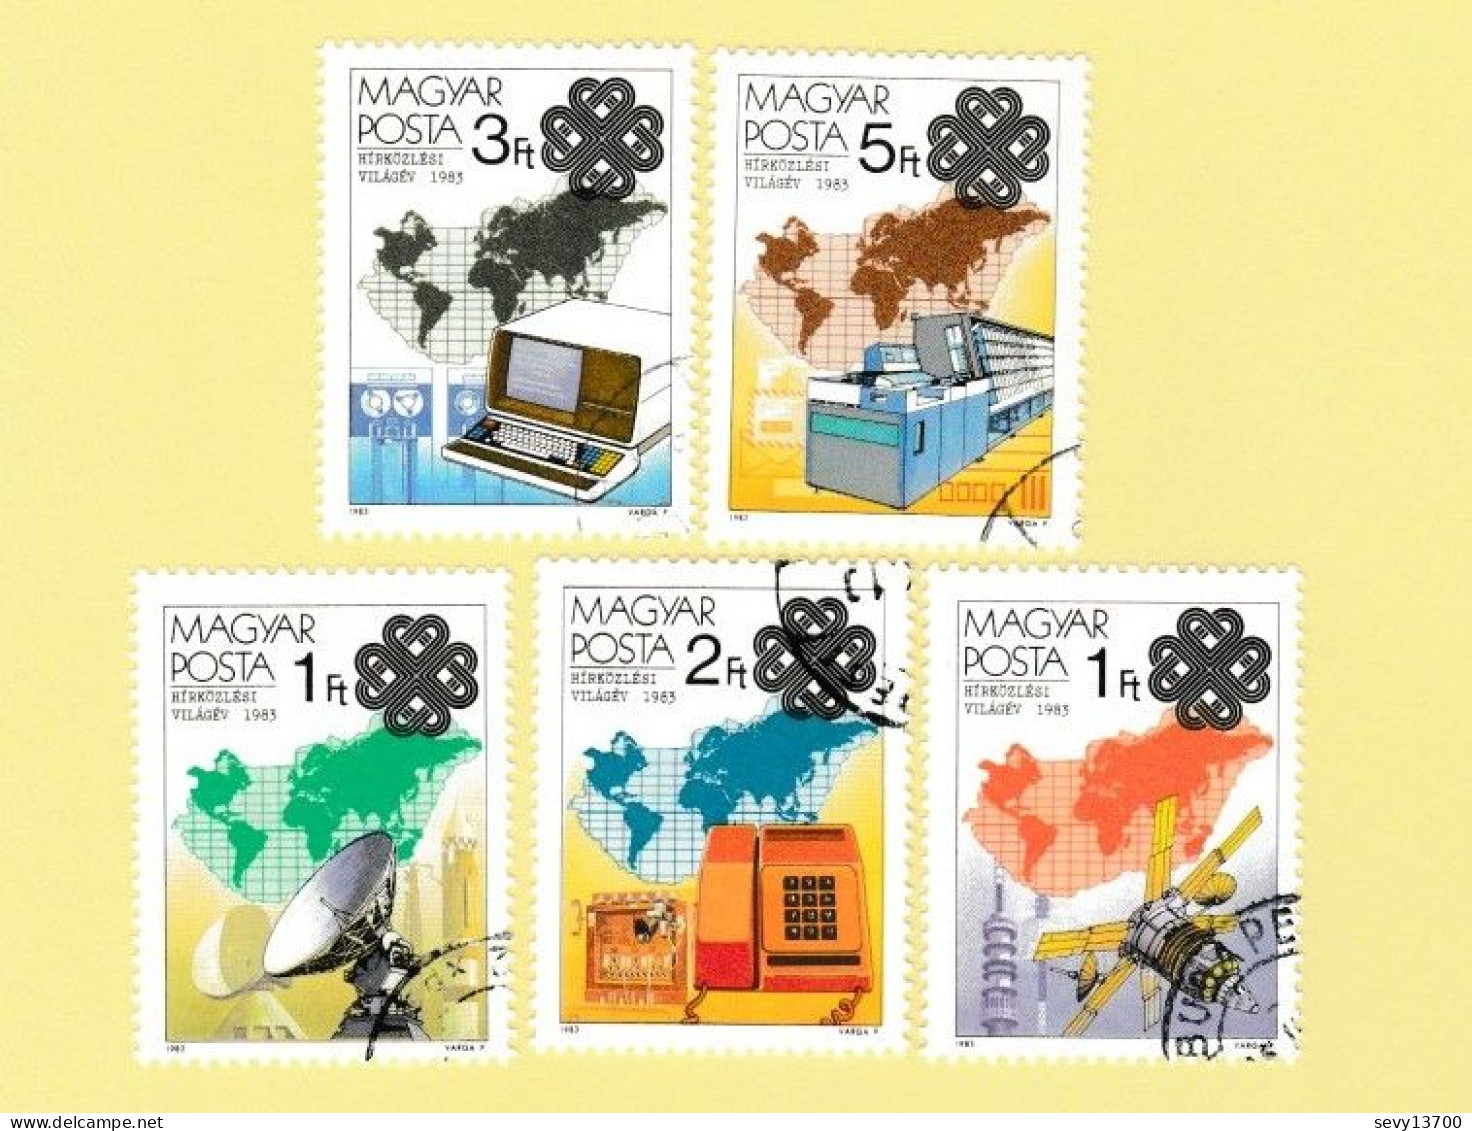 Hongrie - Magyar Posta - Lot de 99 timbres